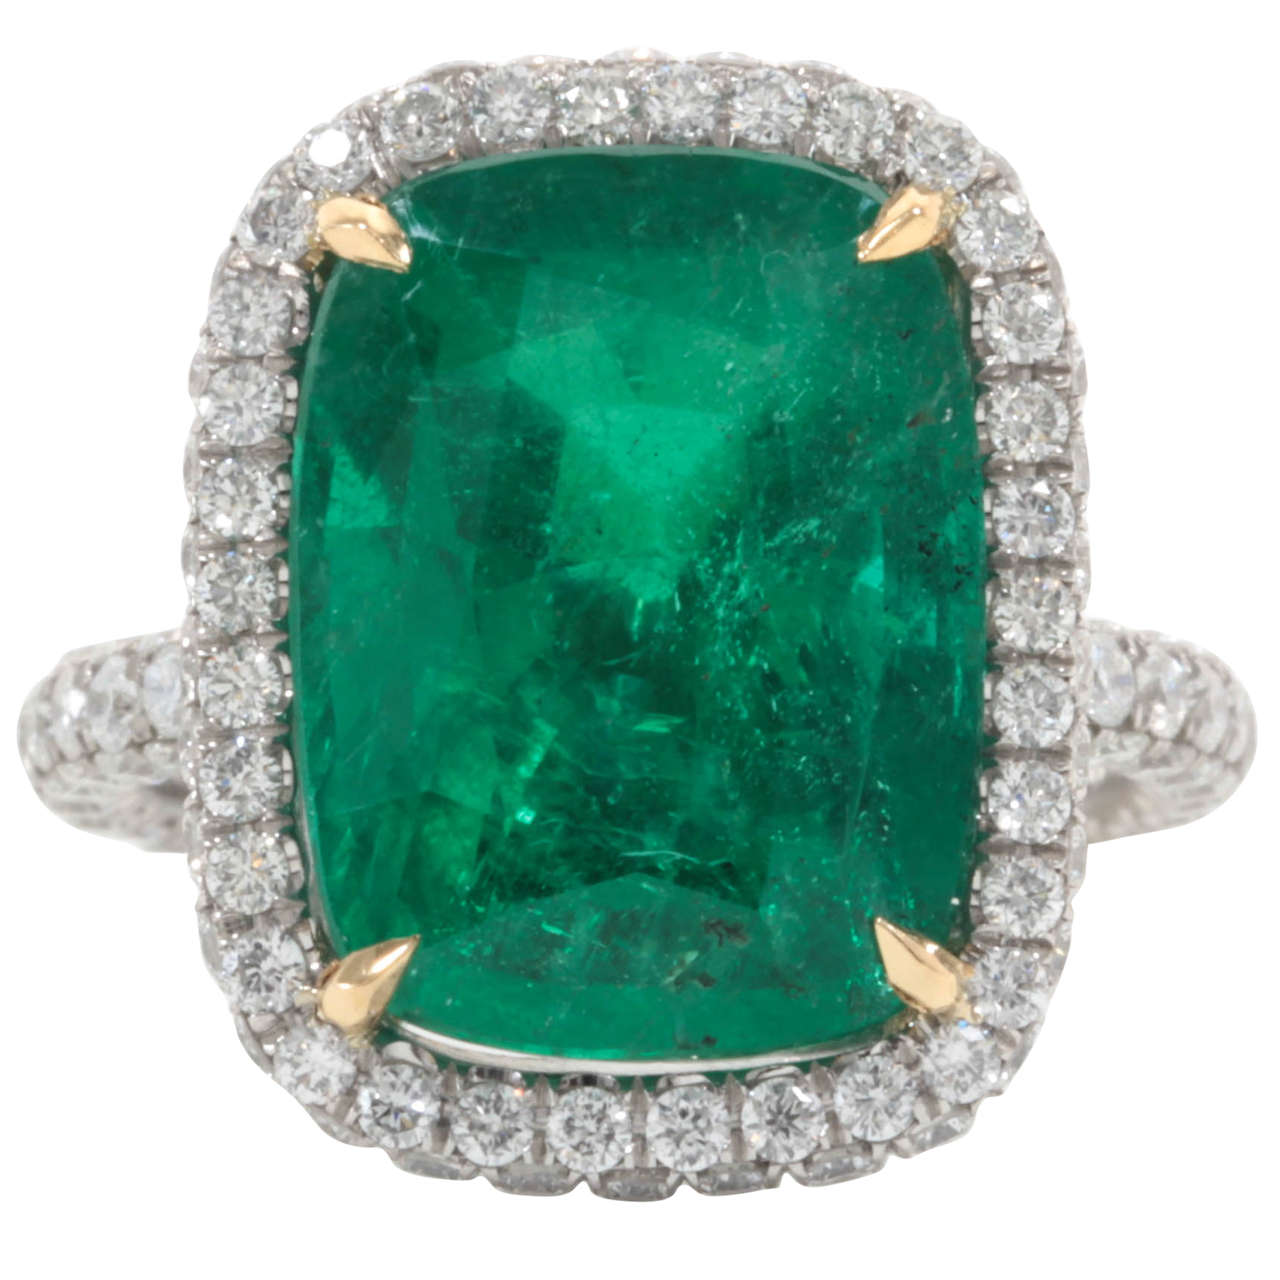 Fabulous Cushion Cut Emerald Diamond Ring Set in Platinum